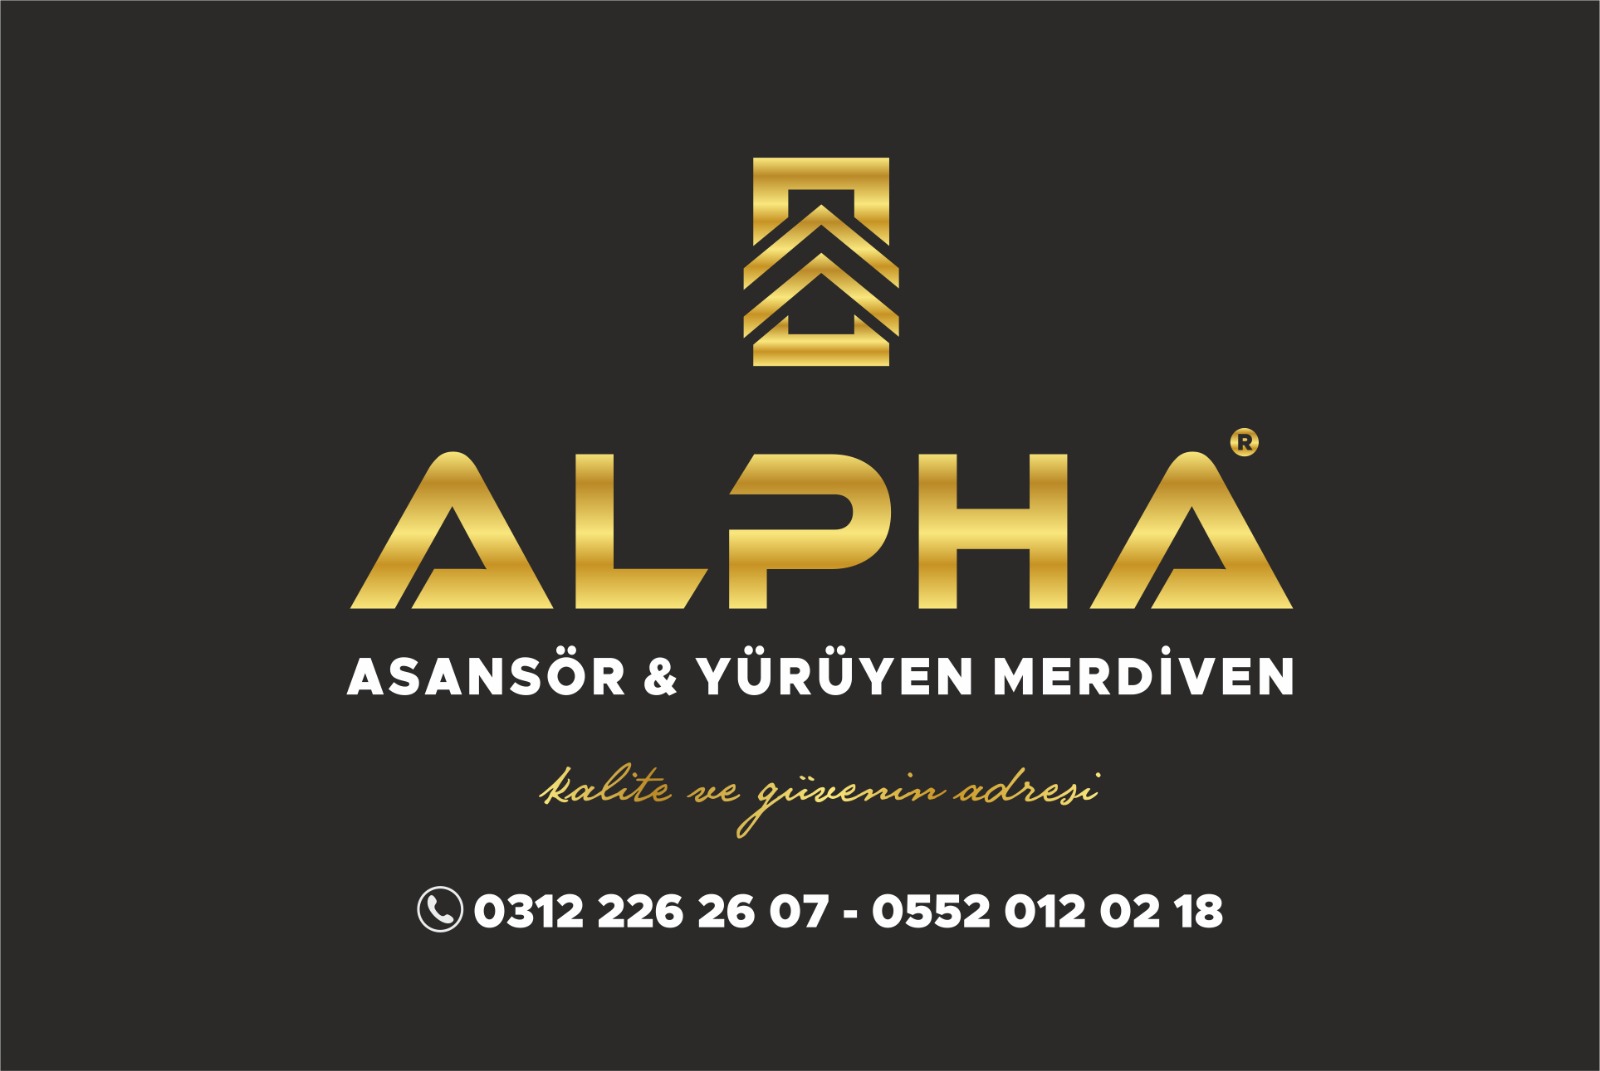 Alpha asansör